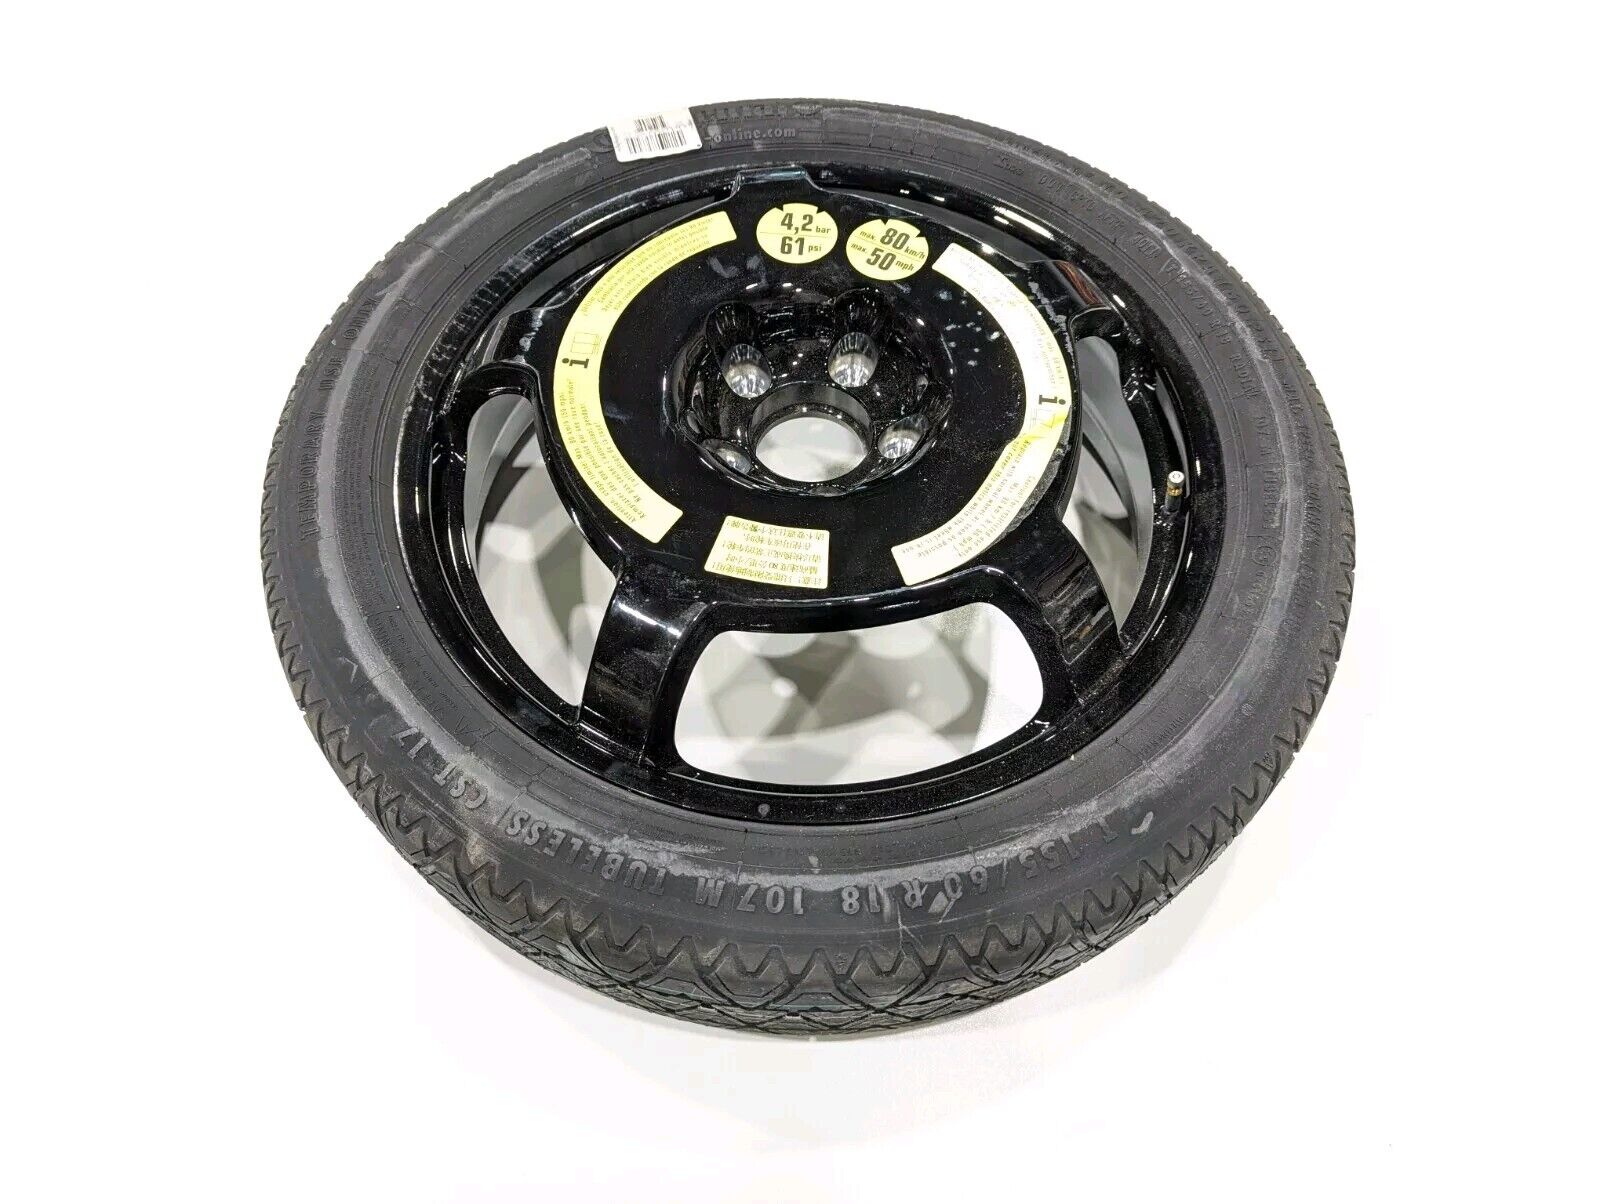 12-18 Mercedes W218 CLS550 Emergency Spare Tire Wheel 155/60 R18 A2124013302